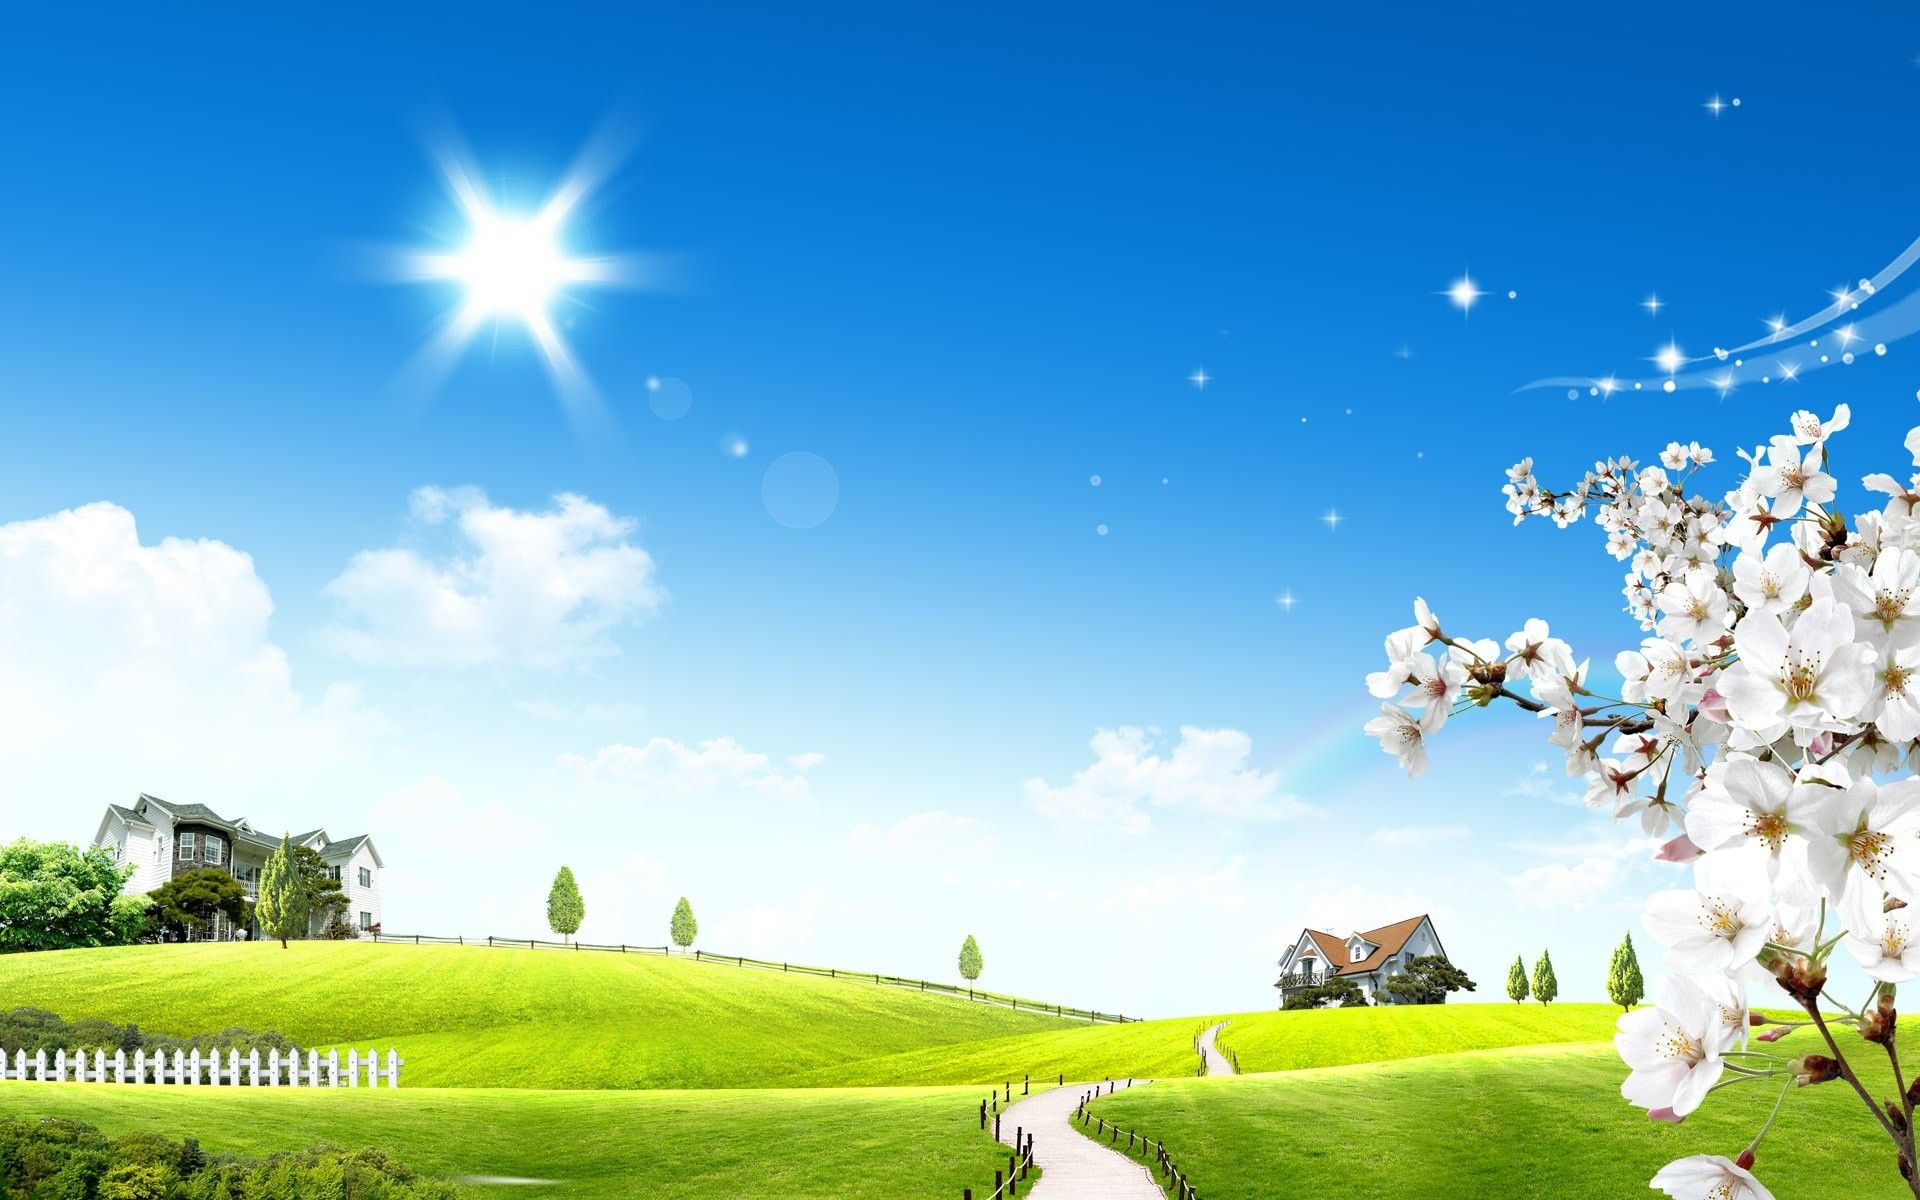 Bright Sunny Days, Sunny Skies Image, Sunny Day Banta Nature Wallpaper In 3D